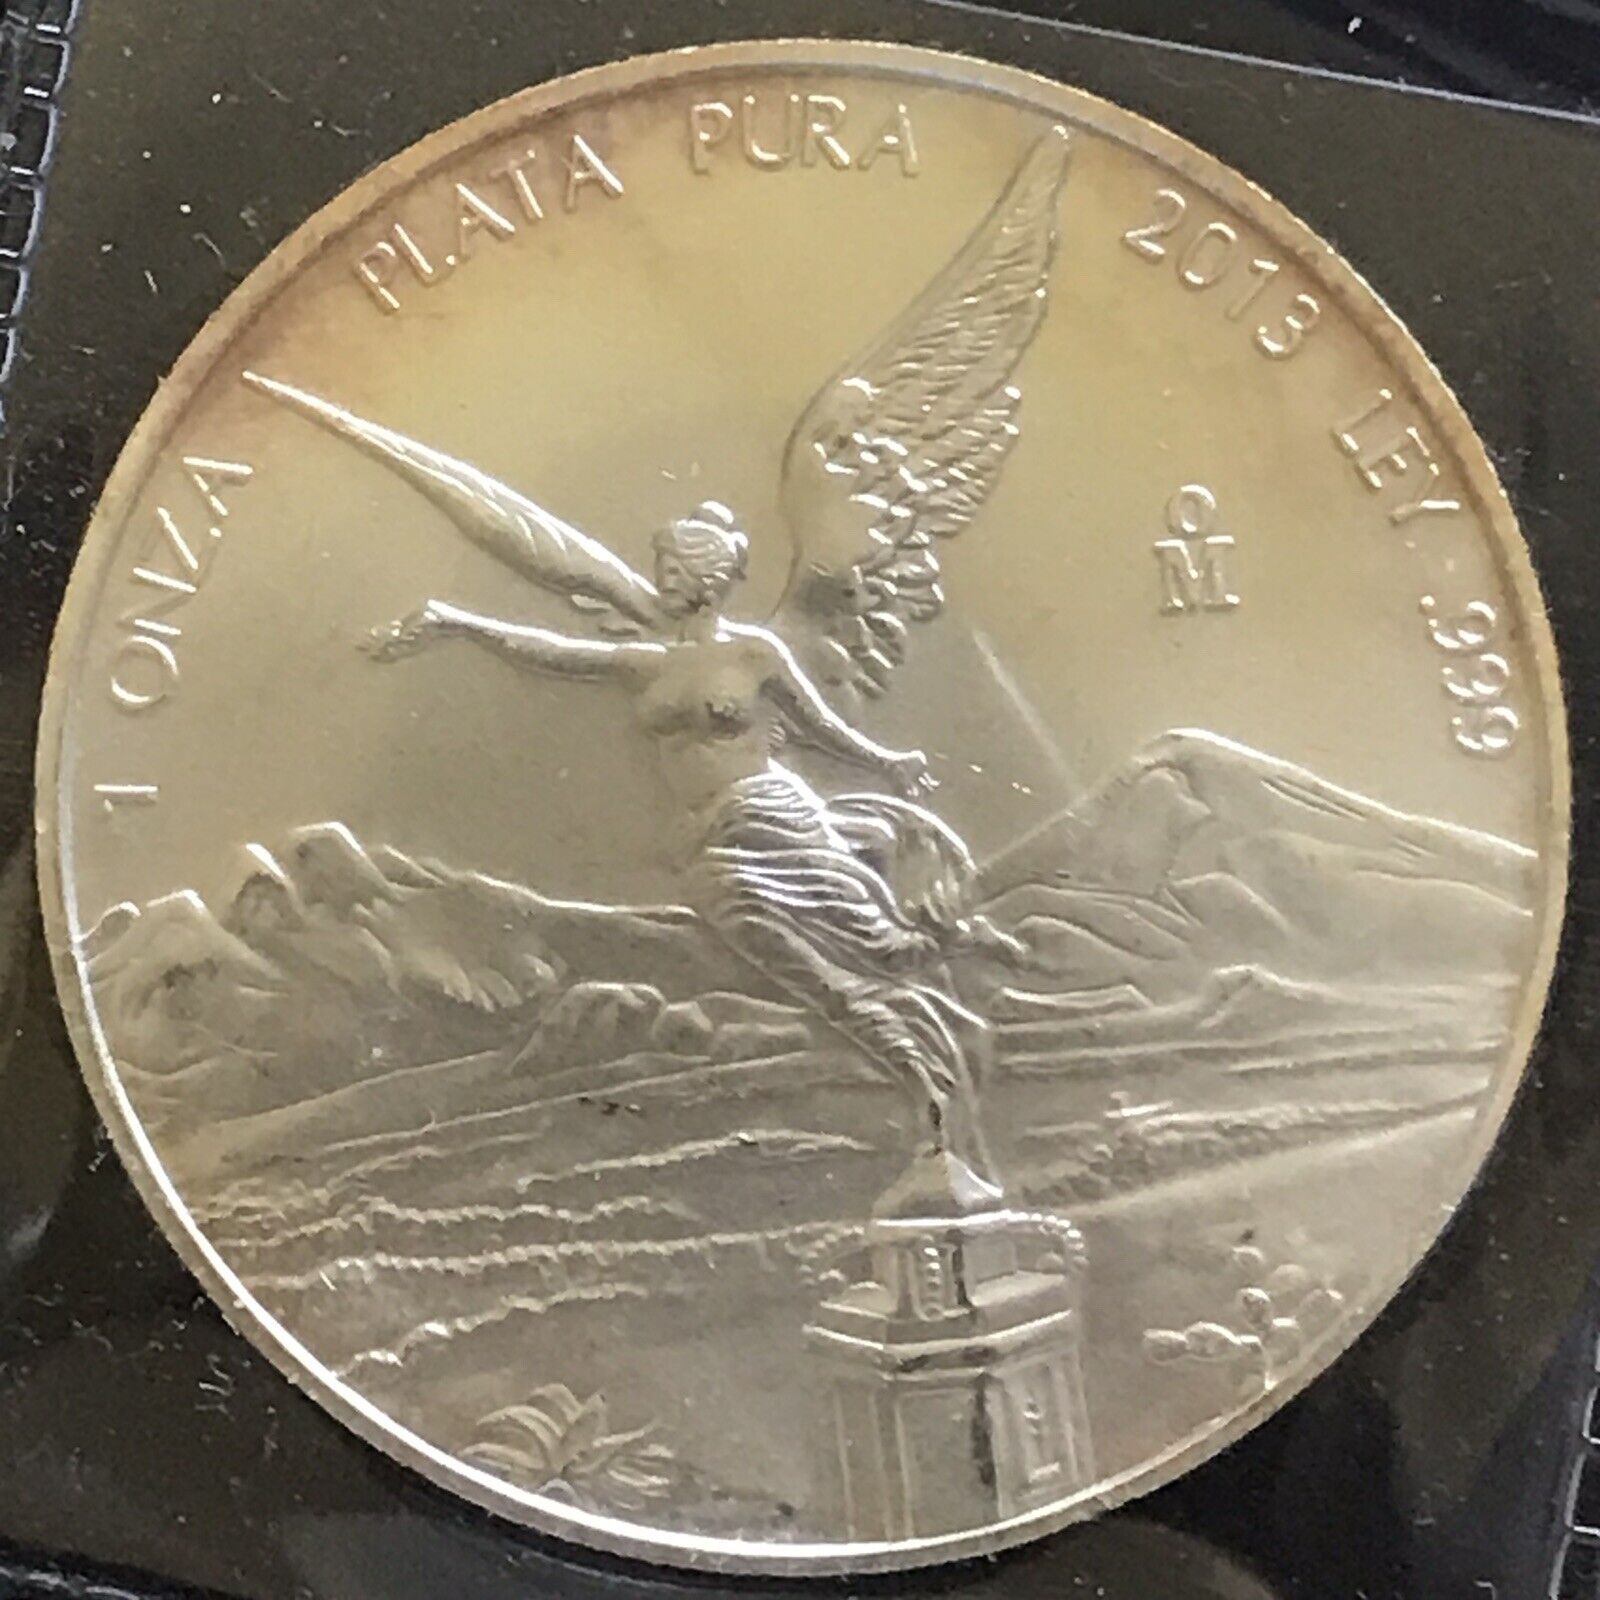 2013 1 oz Mexican Libertad 999 Fine BU Silver Coin #AB17